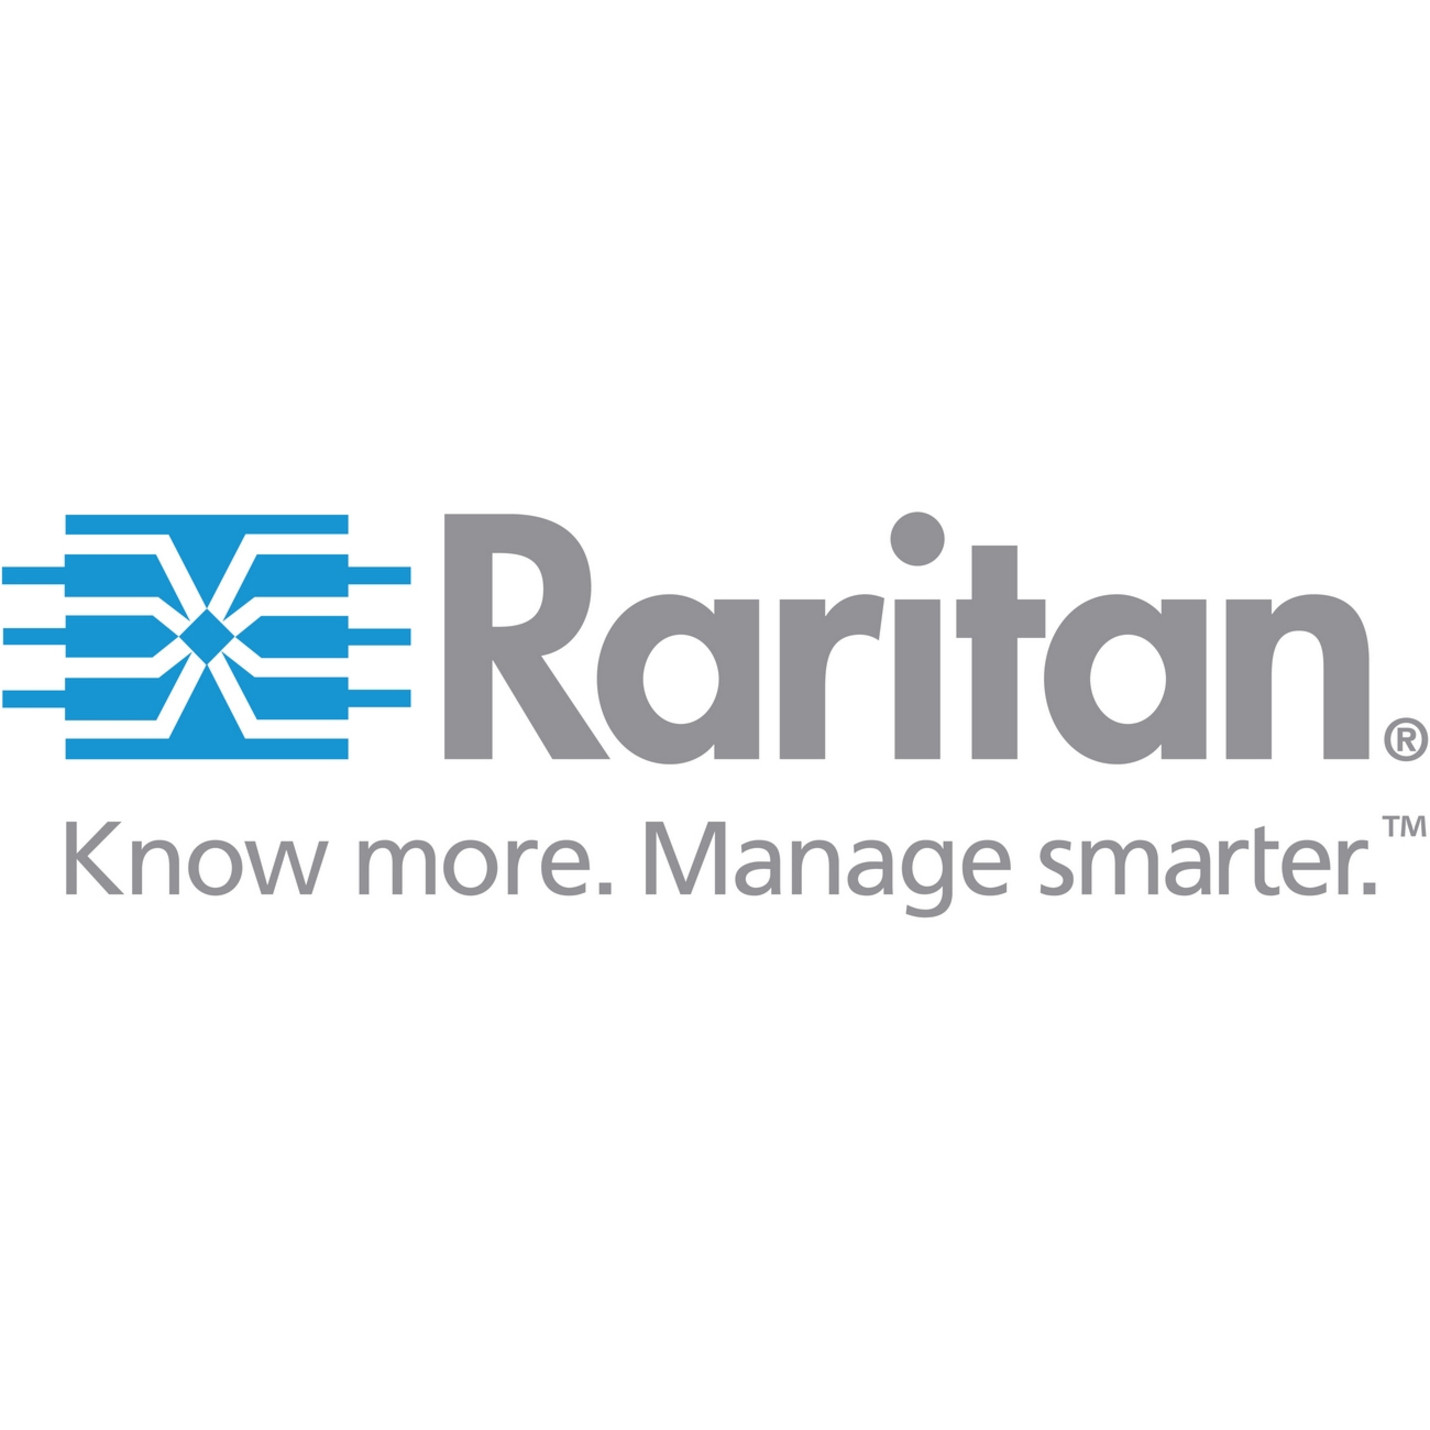 Raritan Computer Guardian Support Services Platinum4 YearService24 HourMaintenancePhysical Service WART1900/24A-2